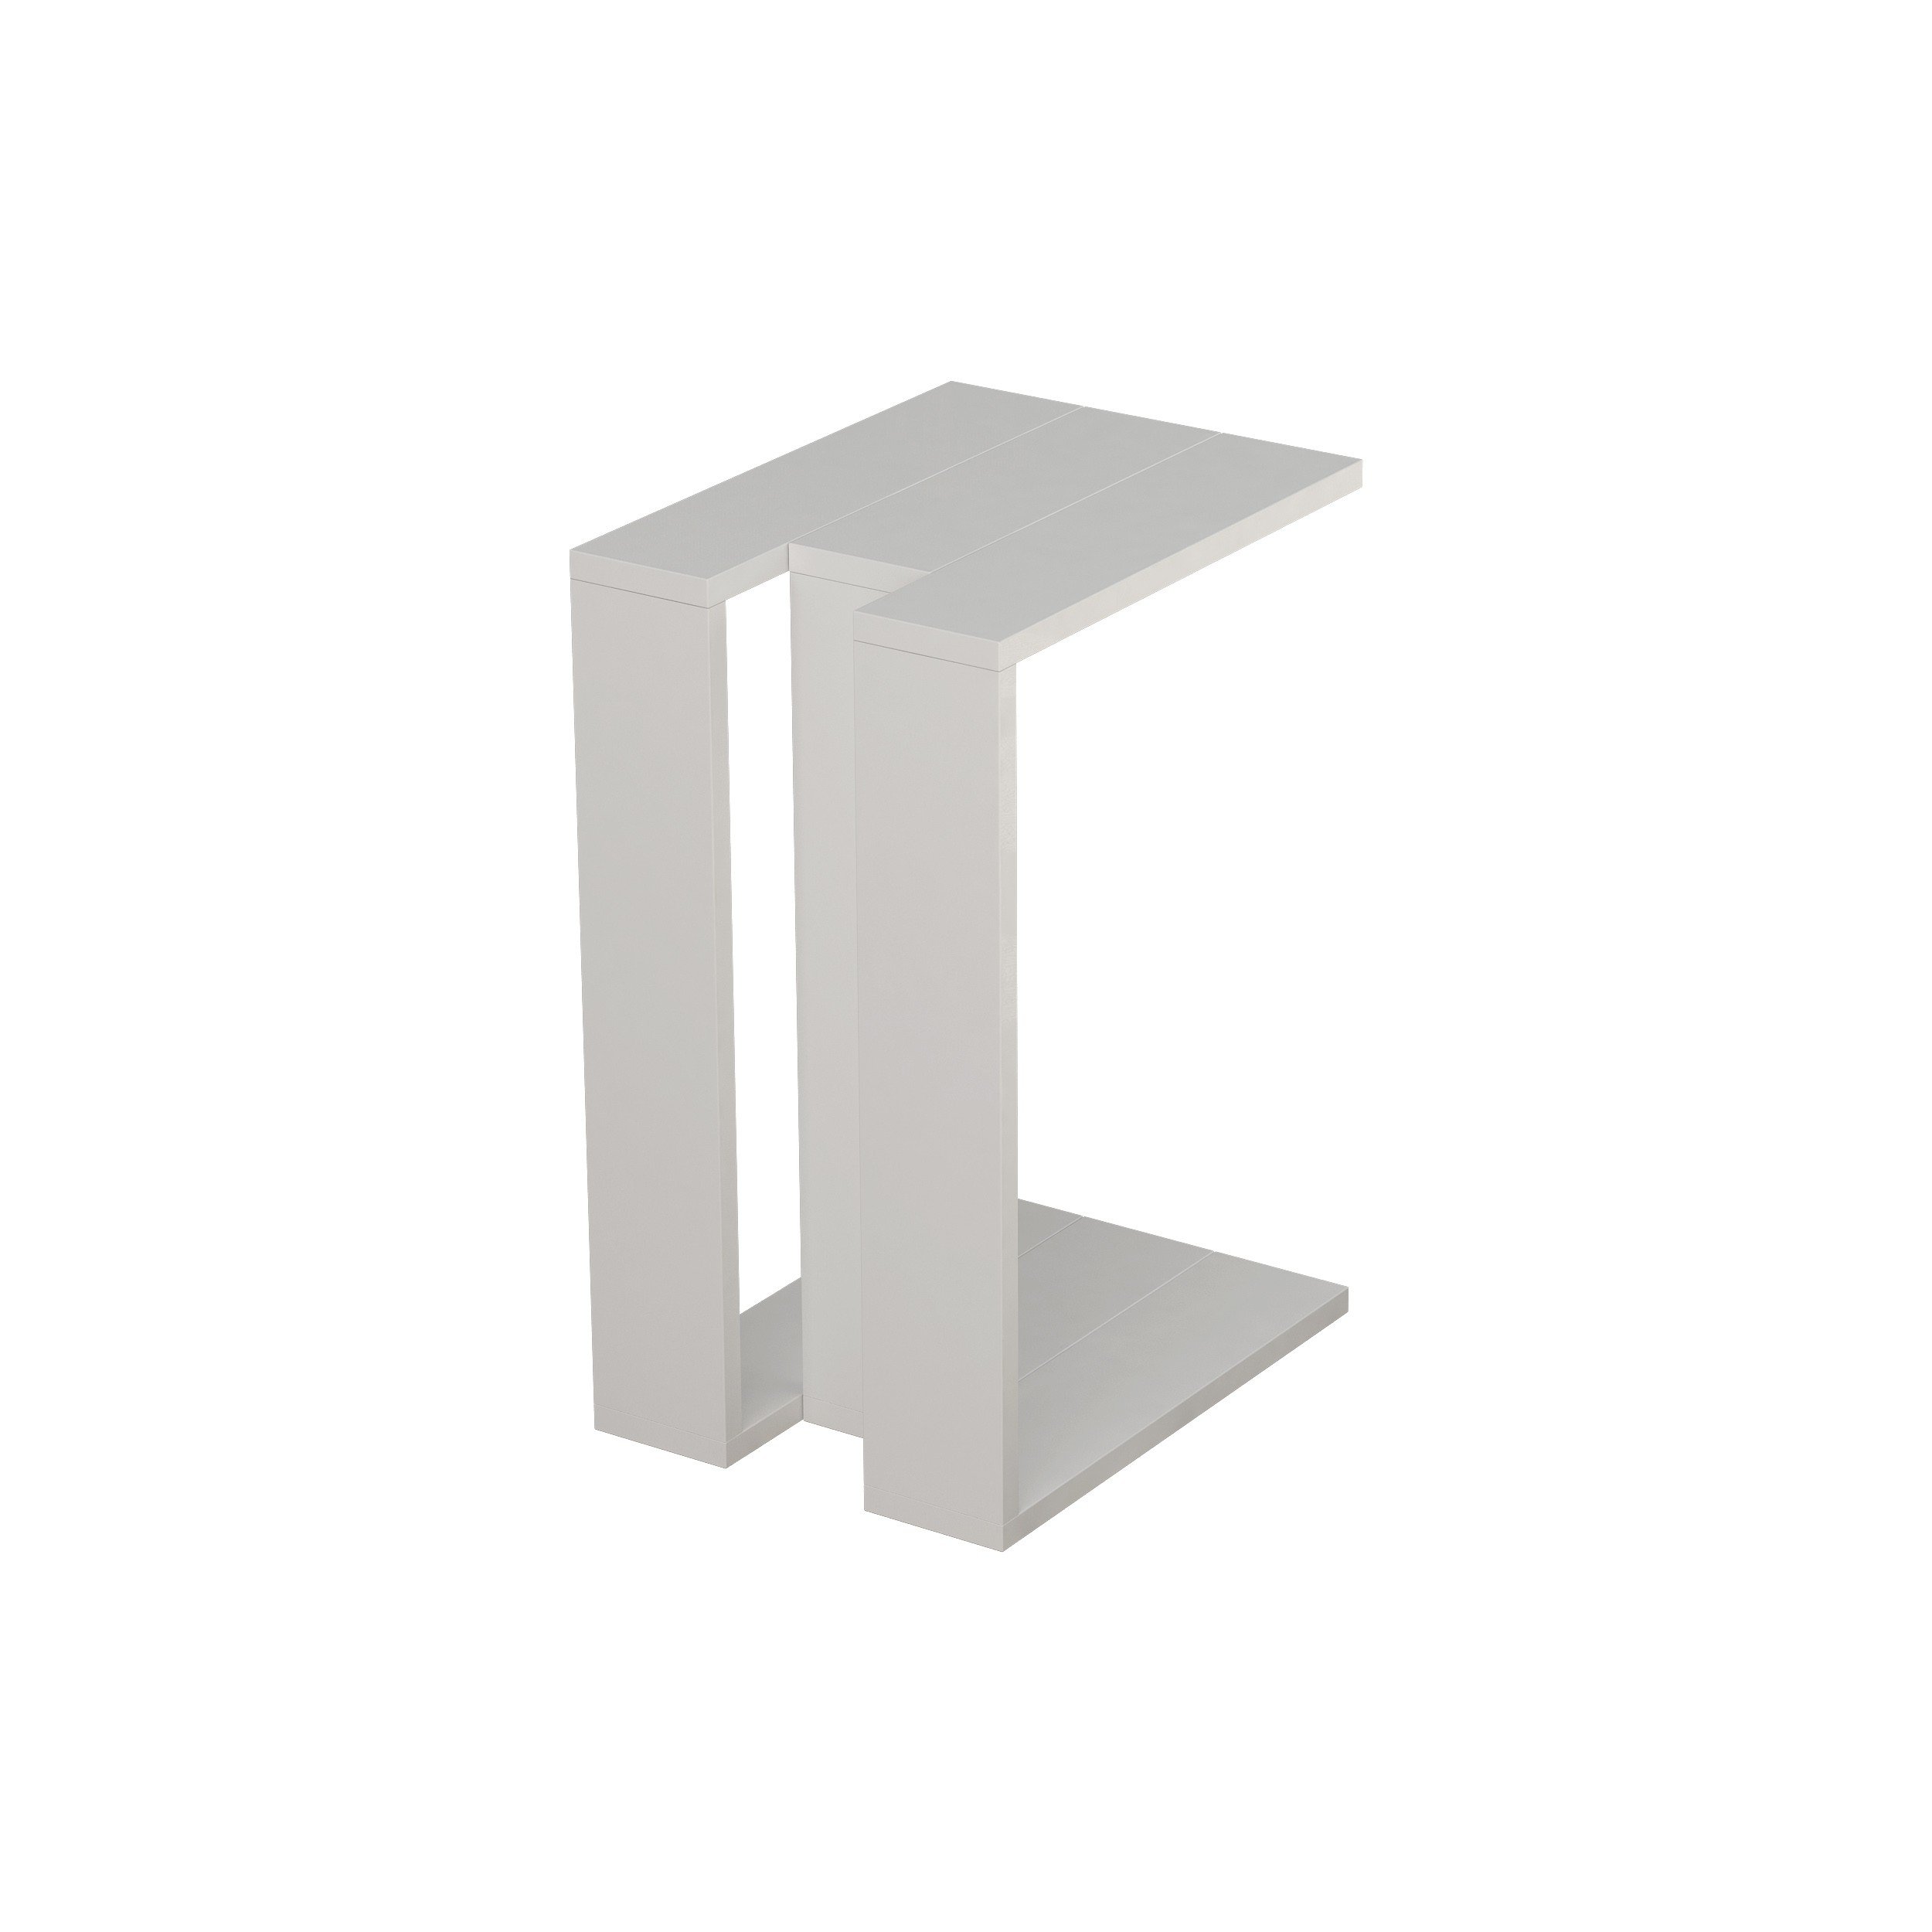 MUJU C TABLE - WHITE - WHITE - M.SH.13620.2